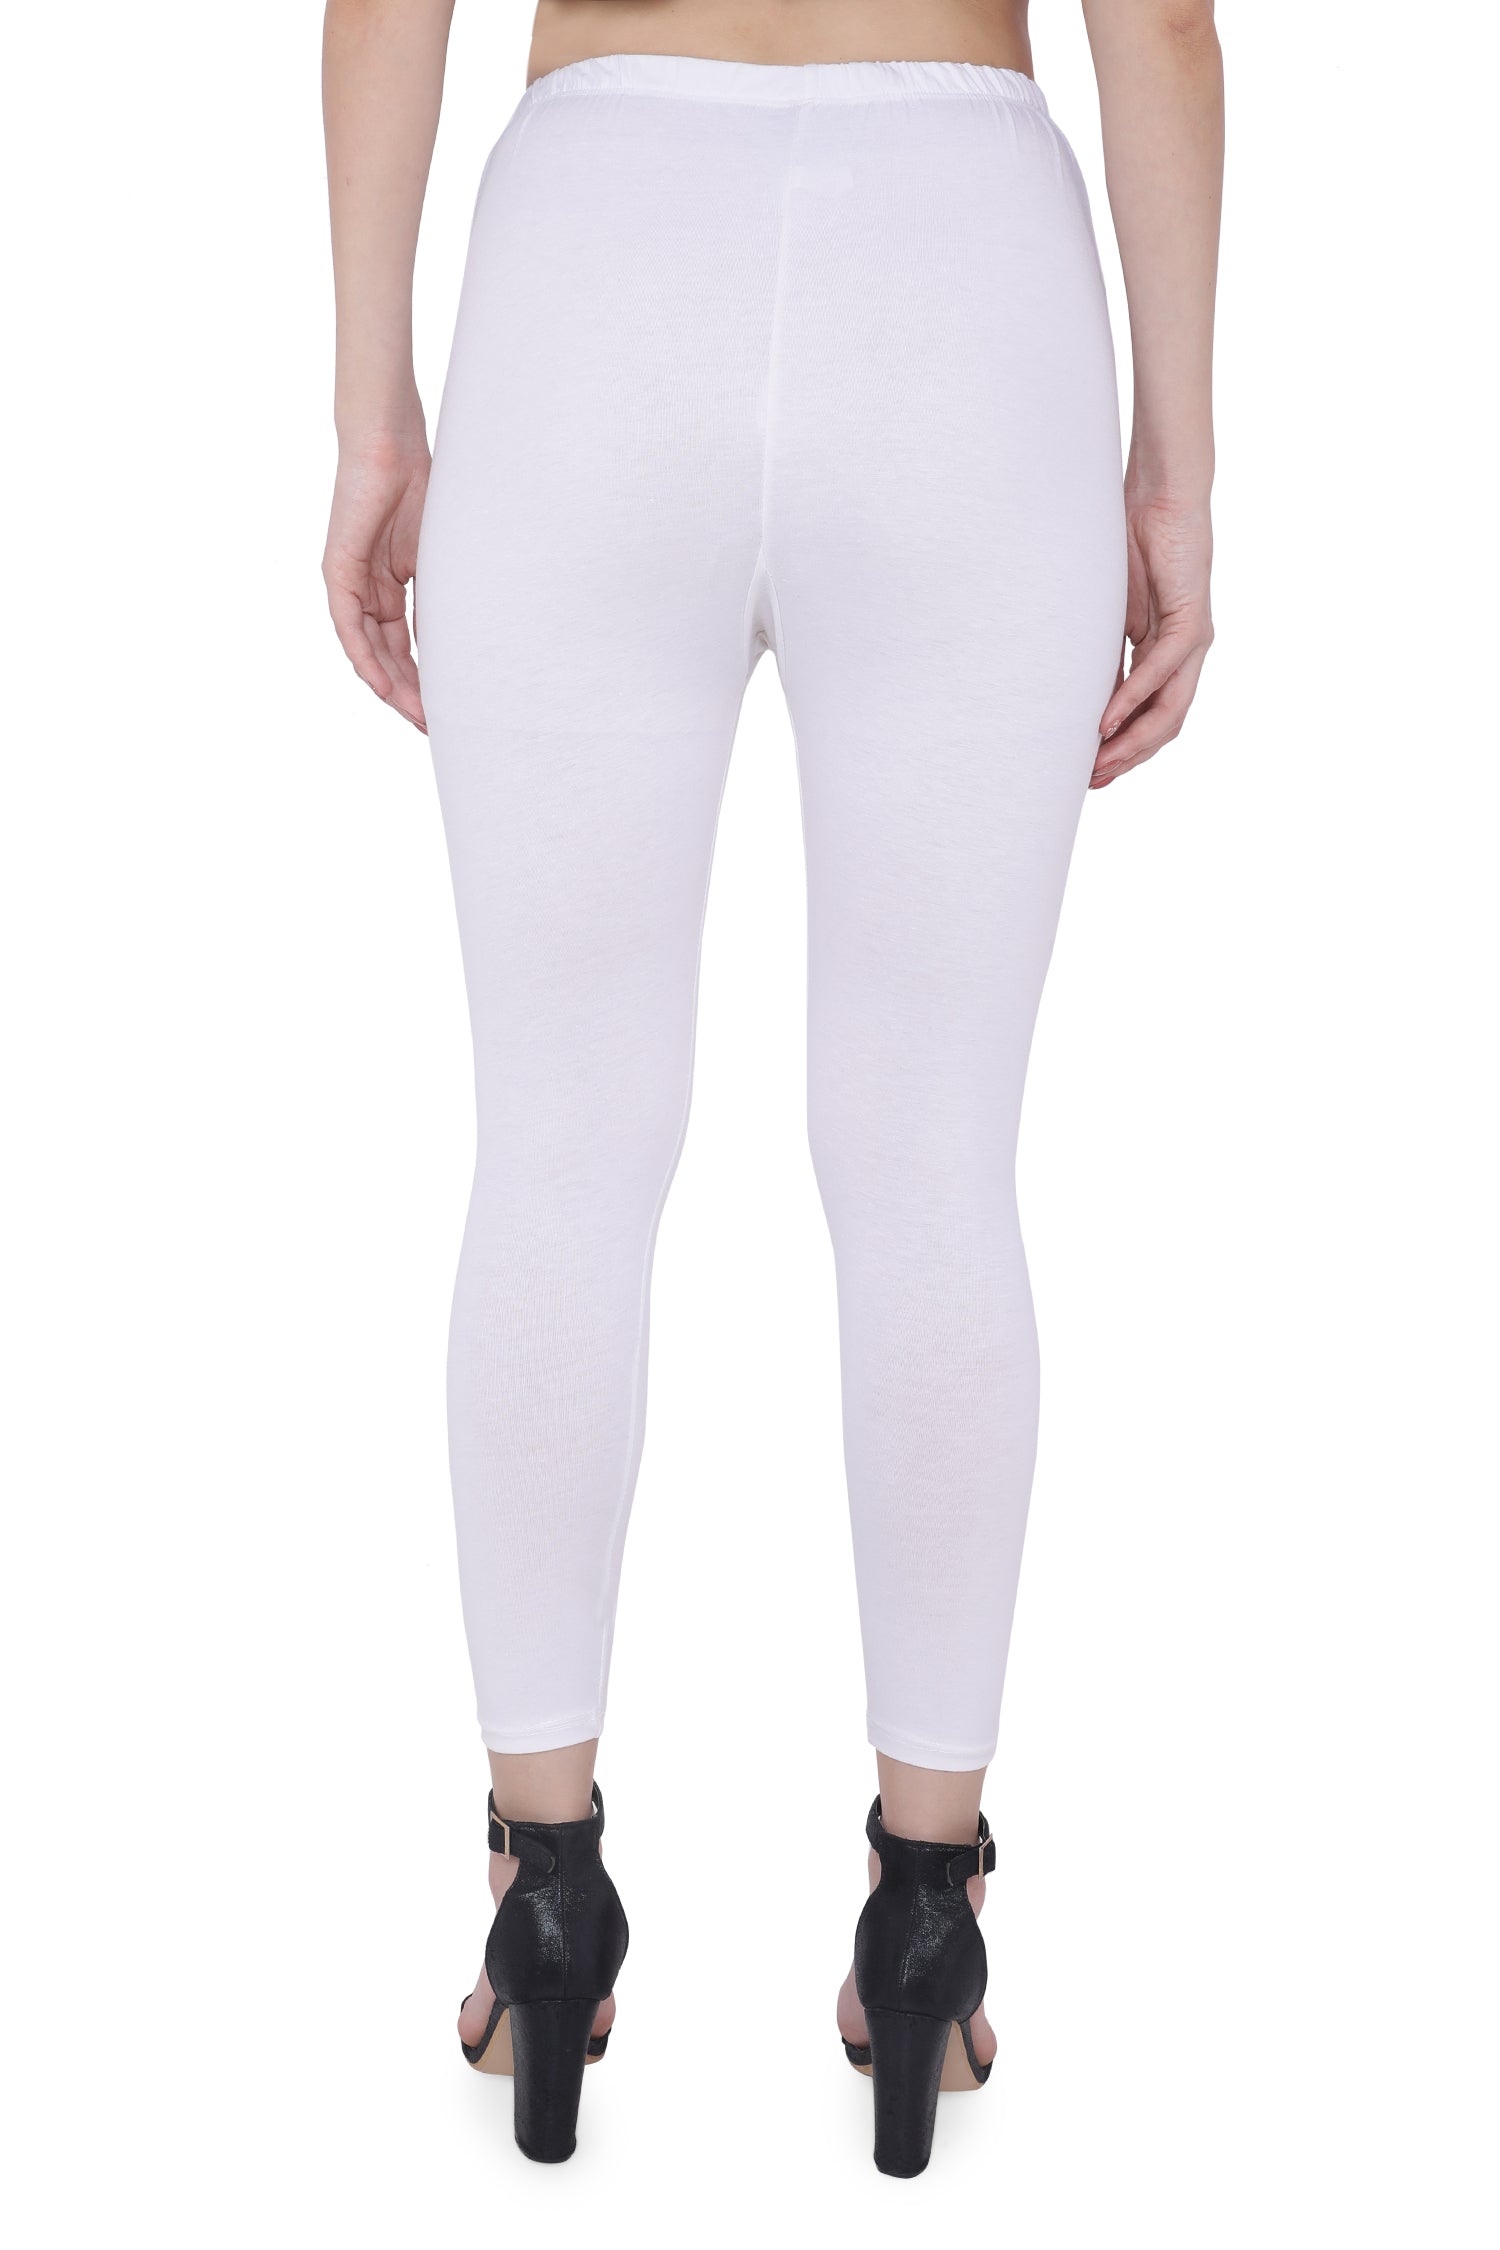 TRASA Women's Cotton 4 Way Stretchable Slim Fit Churidar Leggings -  Off-White